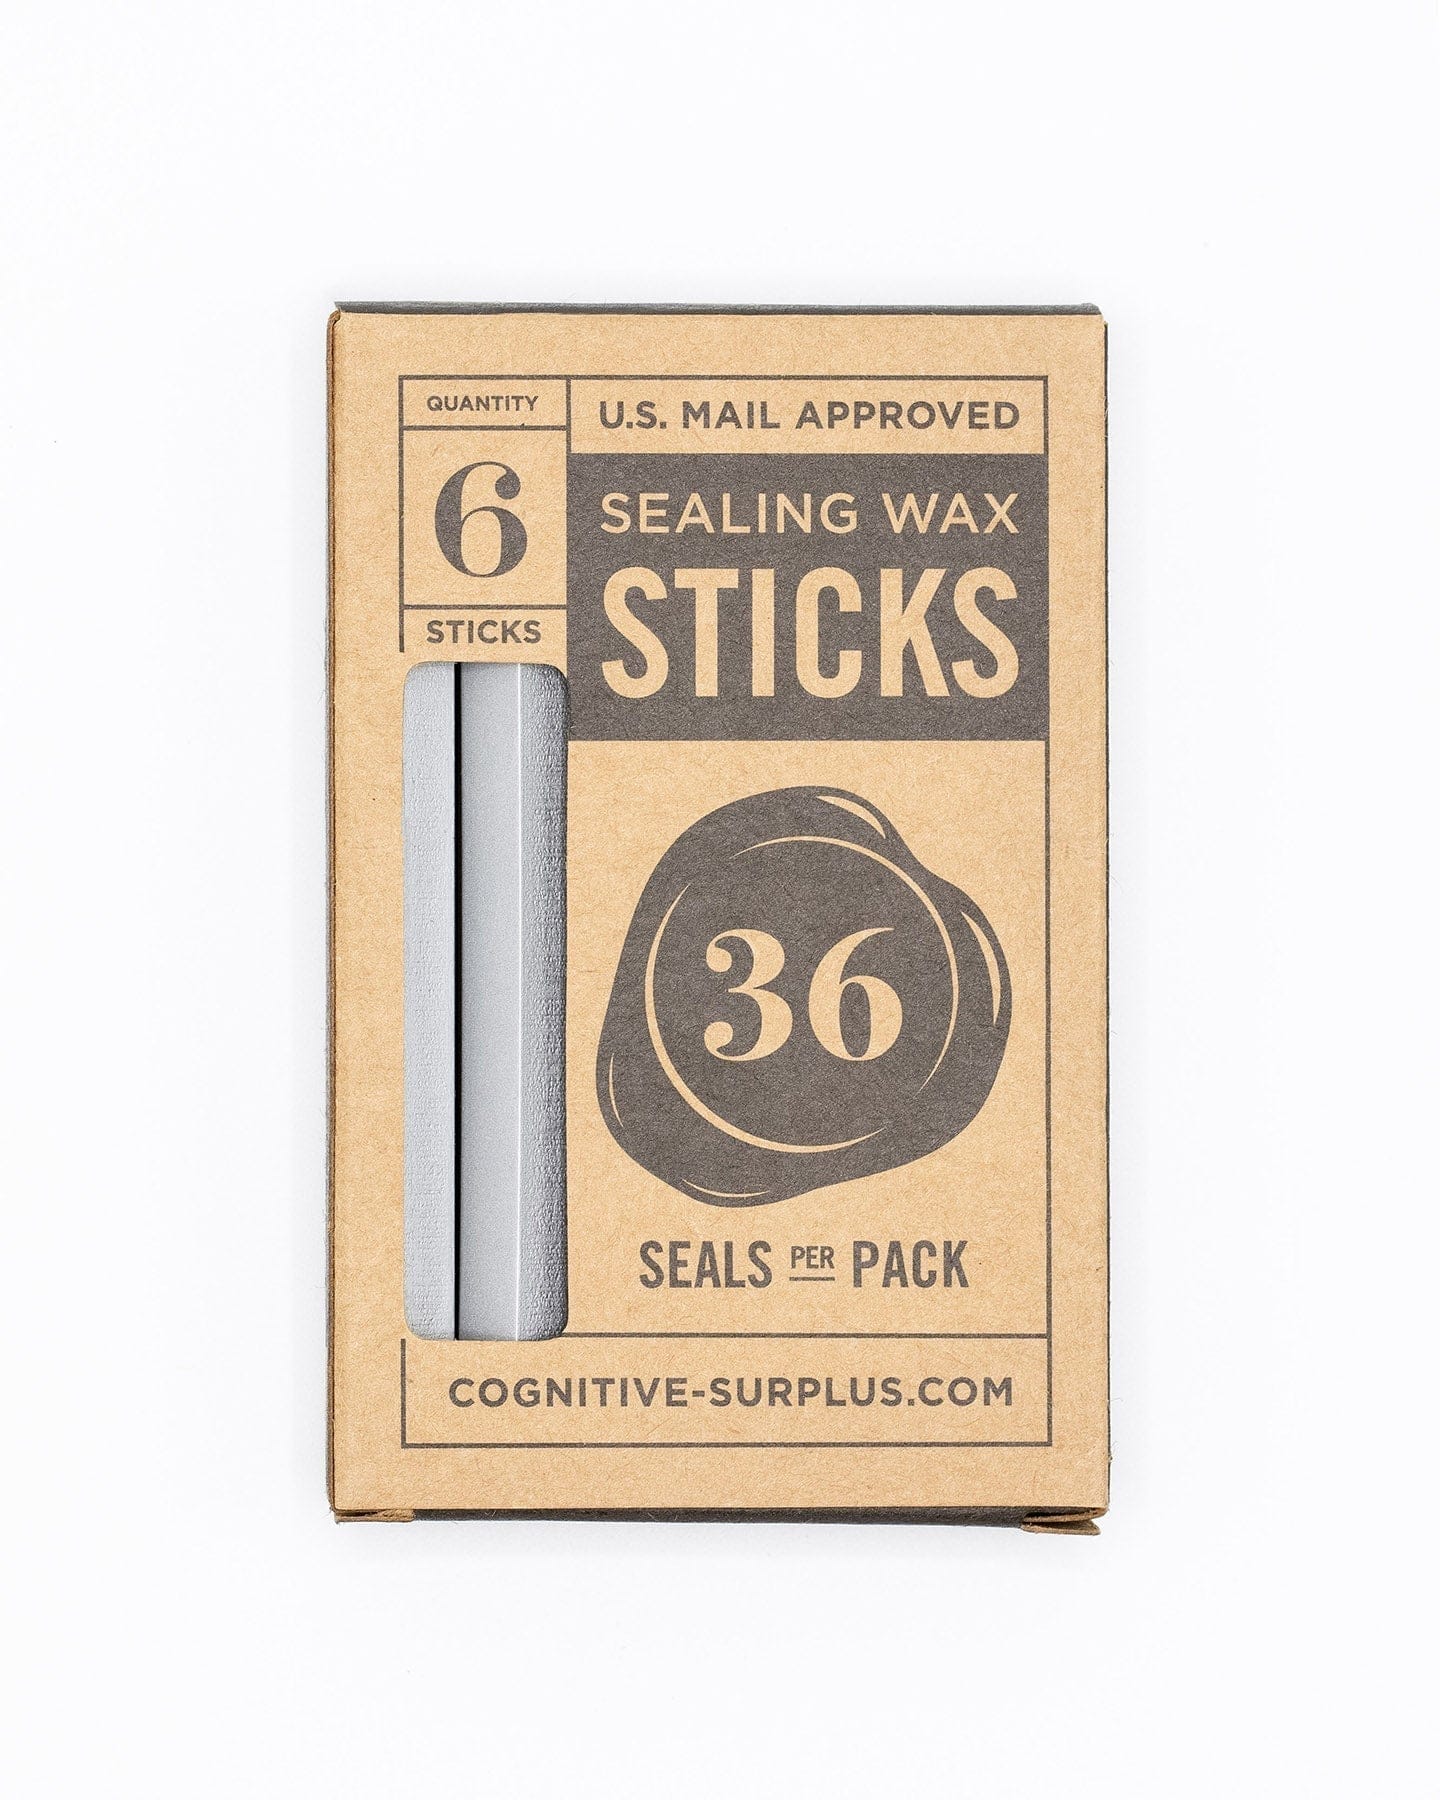 Silver Shimmer Sealing Wax Sticks Cognitive Surplus